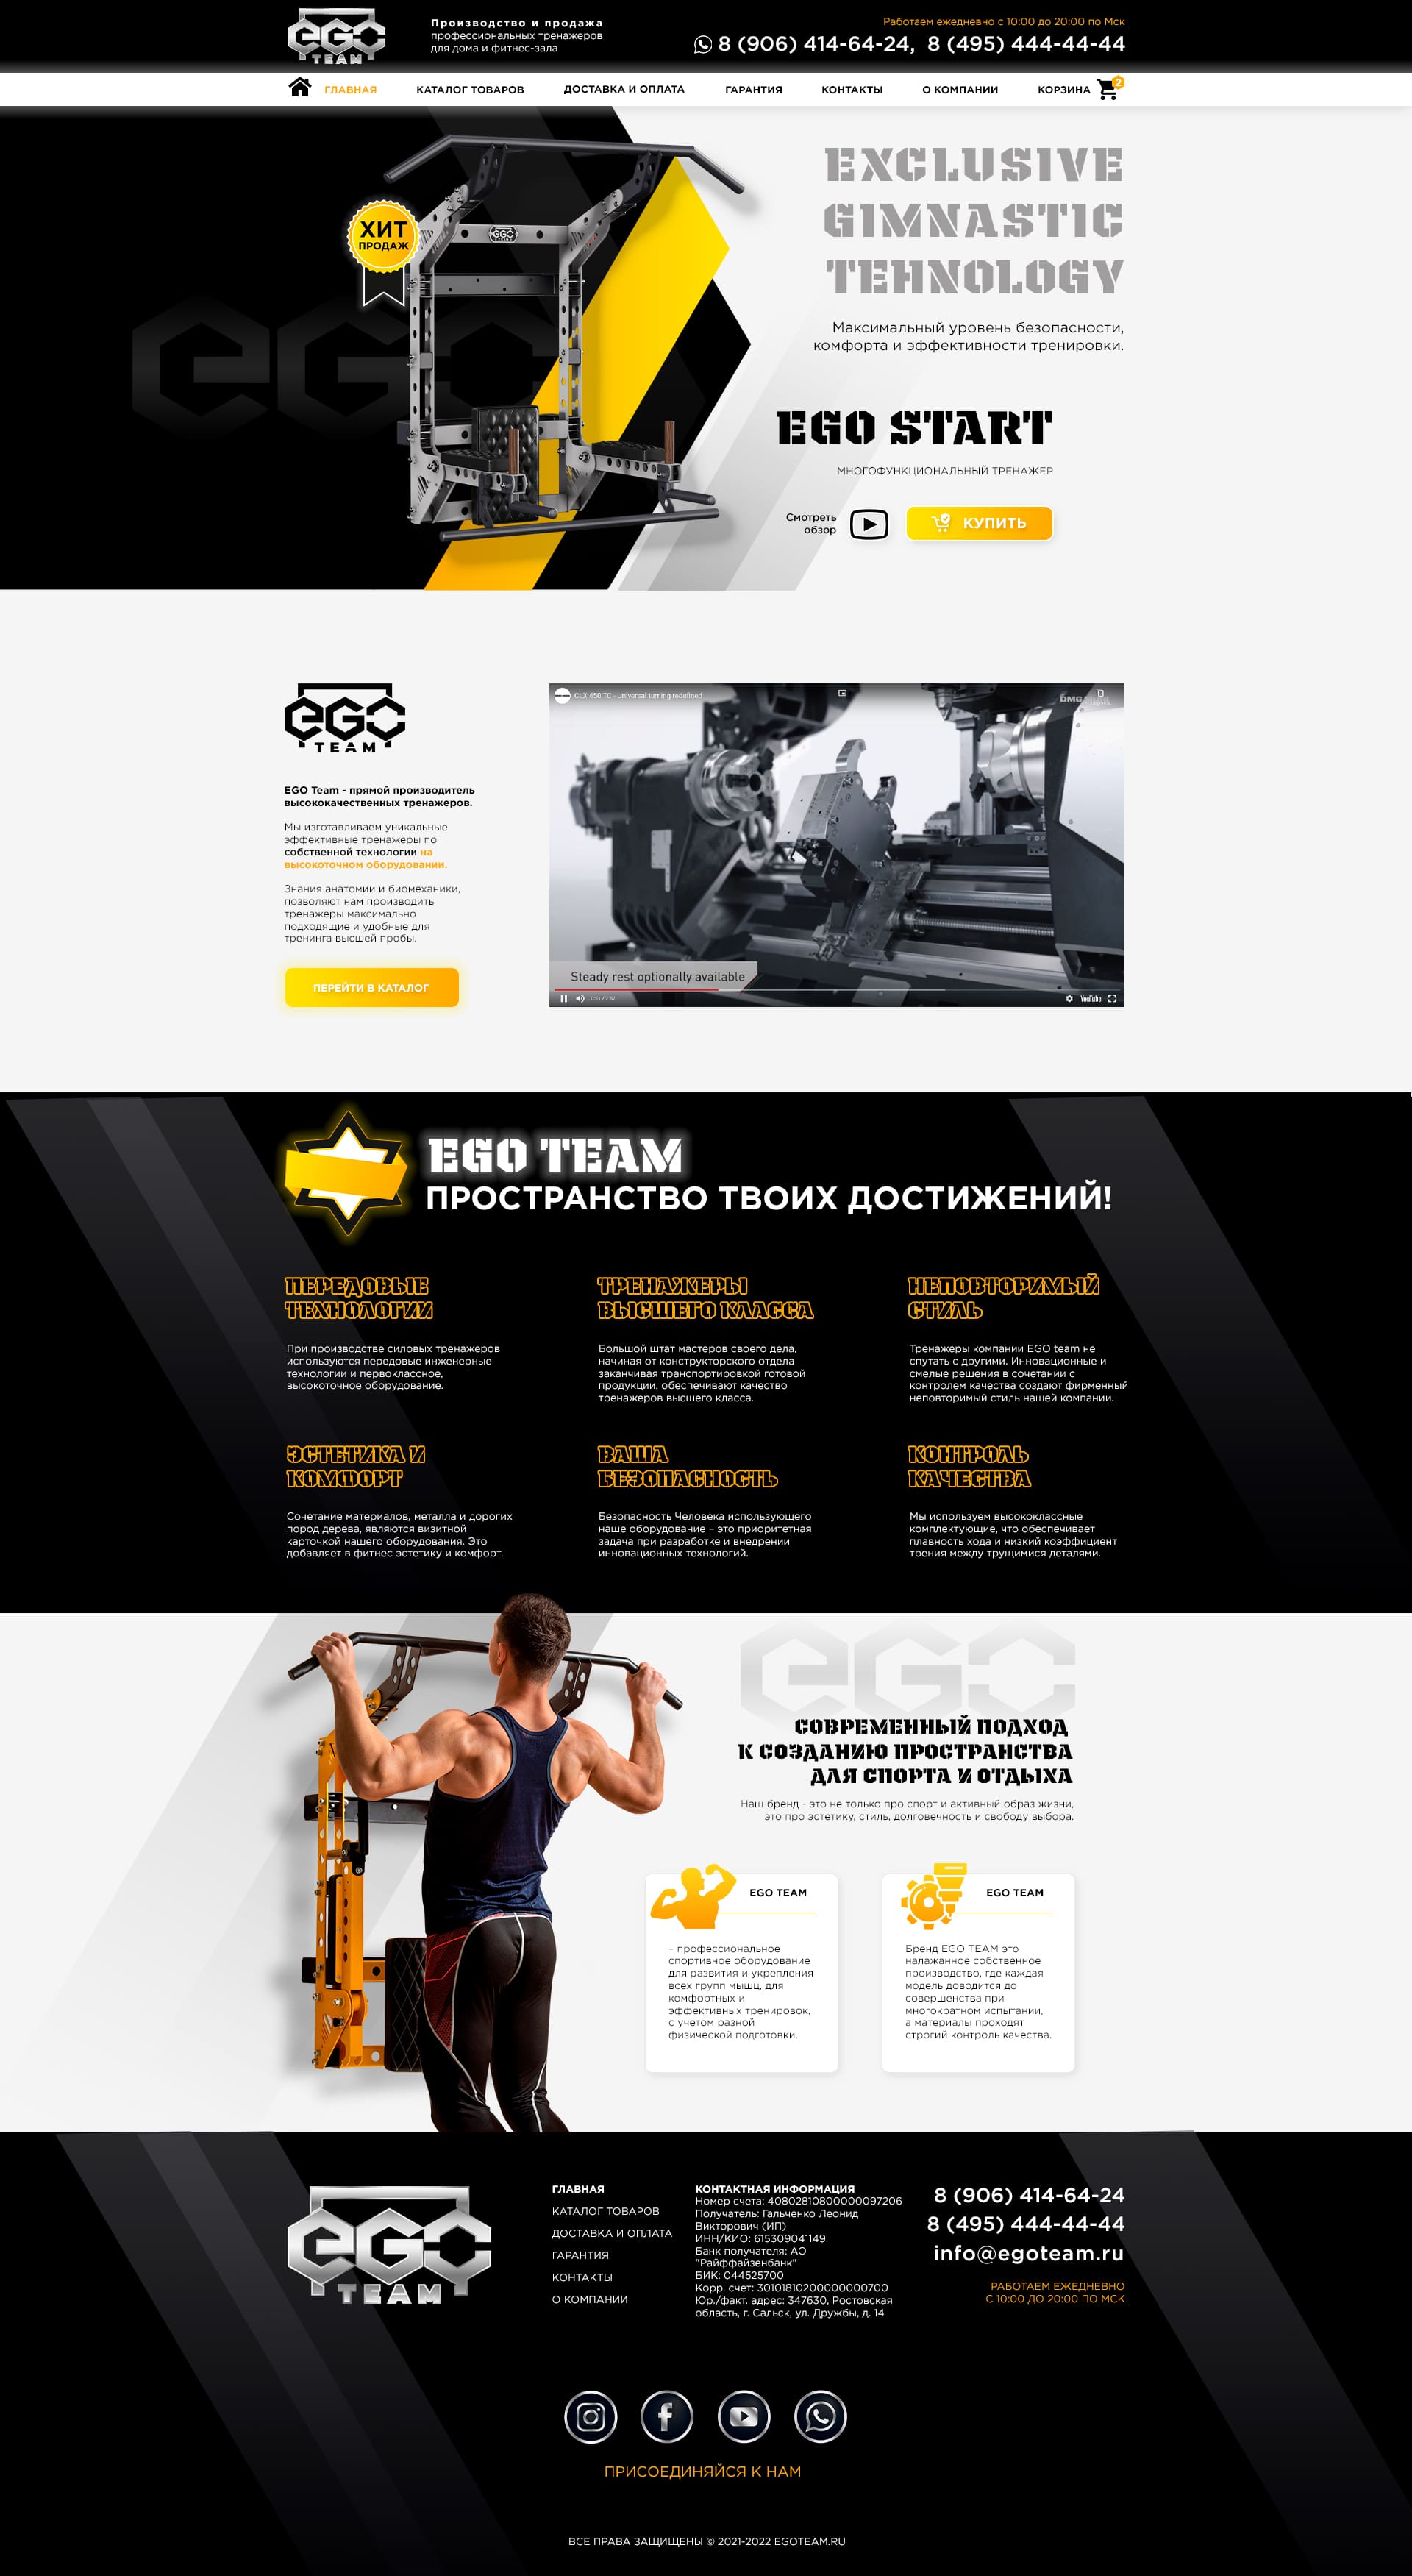 Web design for a fitness equipment manufacturer